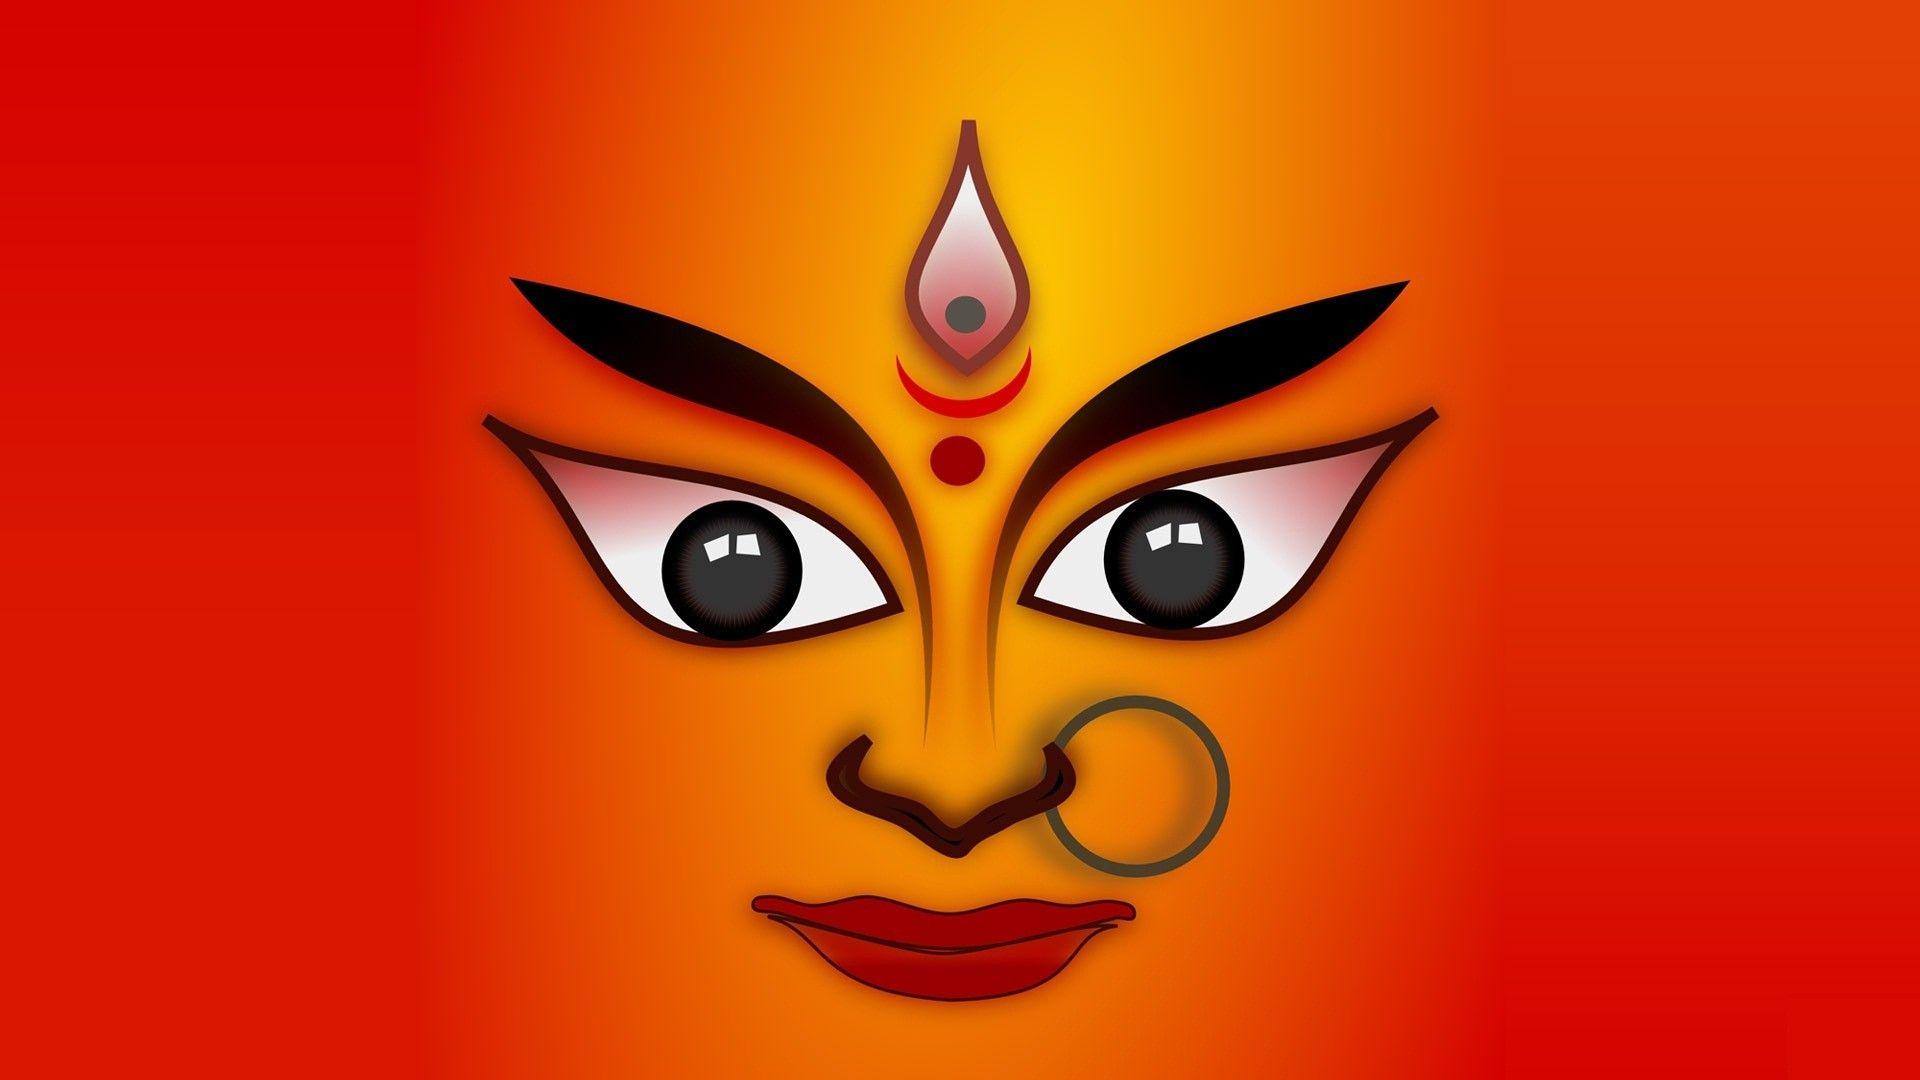 Goddess Durga Wallpapers - Top Free Goddess Durga Backgrounds